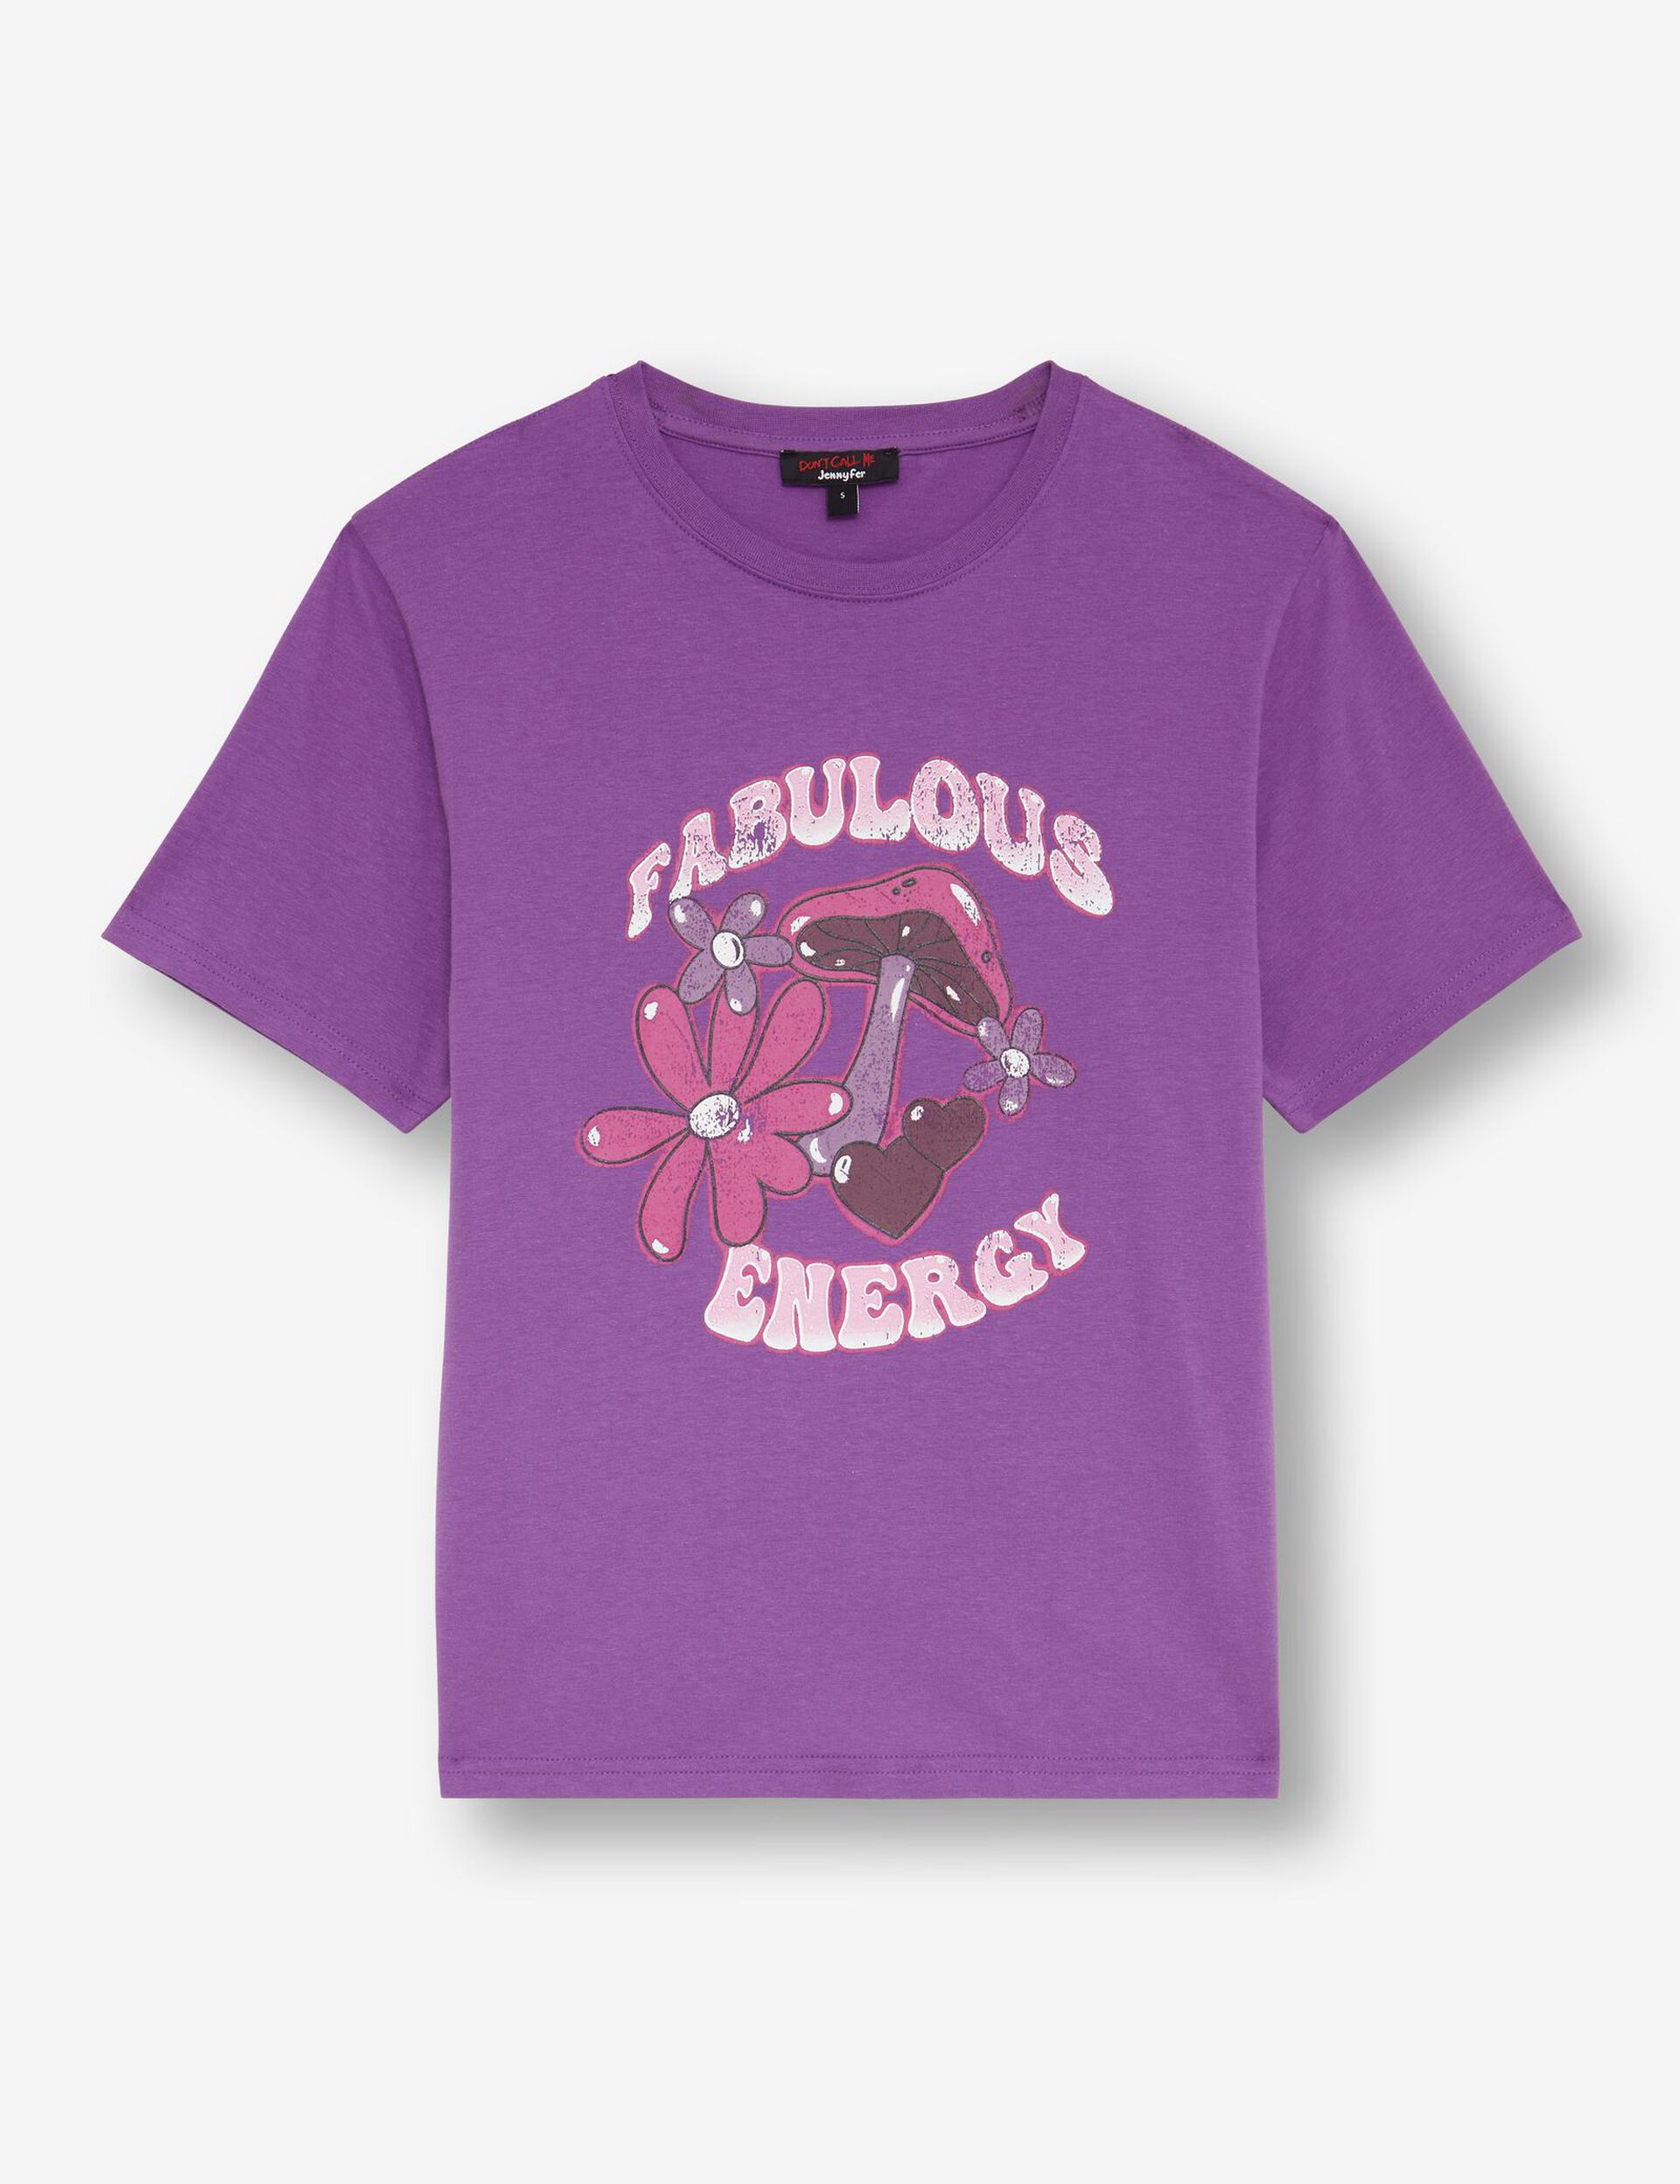 Tee-shirt violet fabulous energy 